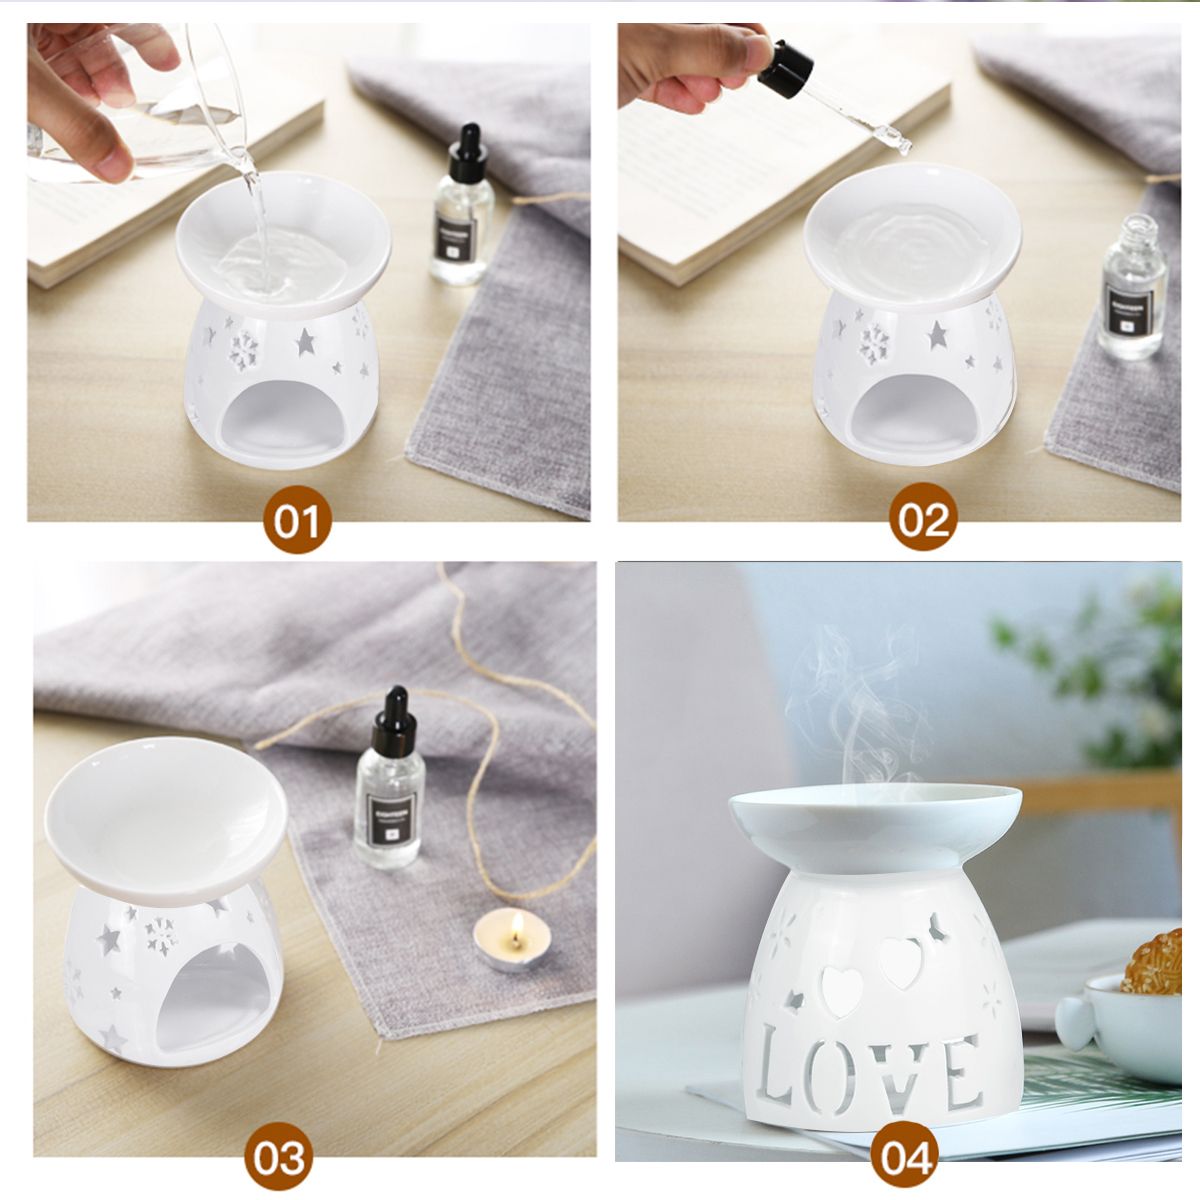 Ceramic-Oil-Burner-Hollow-Wax-Melt-Burner-Aromatherapy-Tea-Light-Candle-Holder-1742003